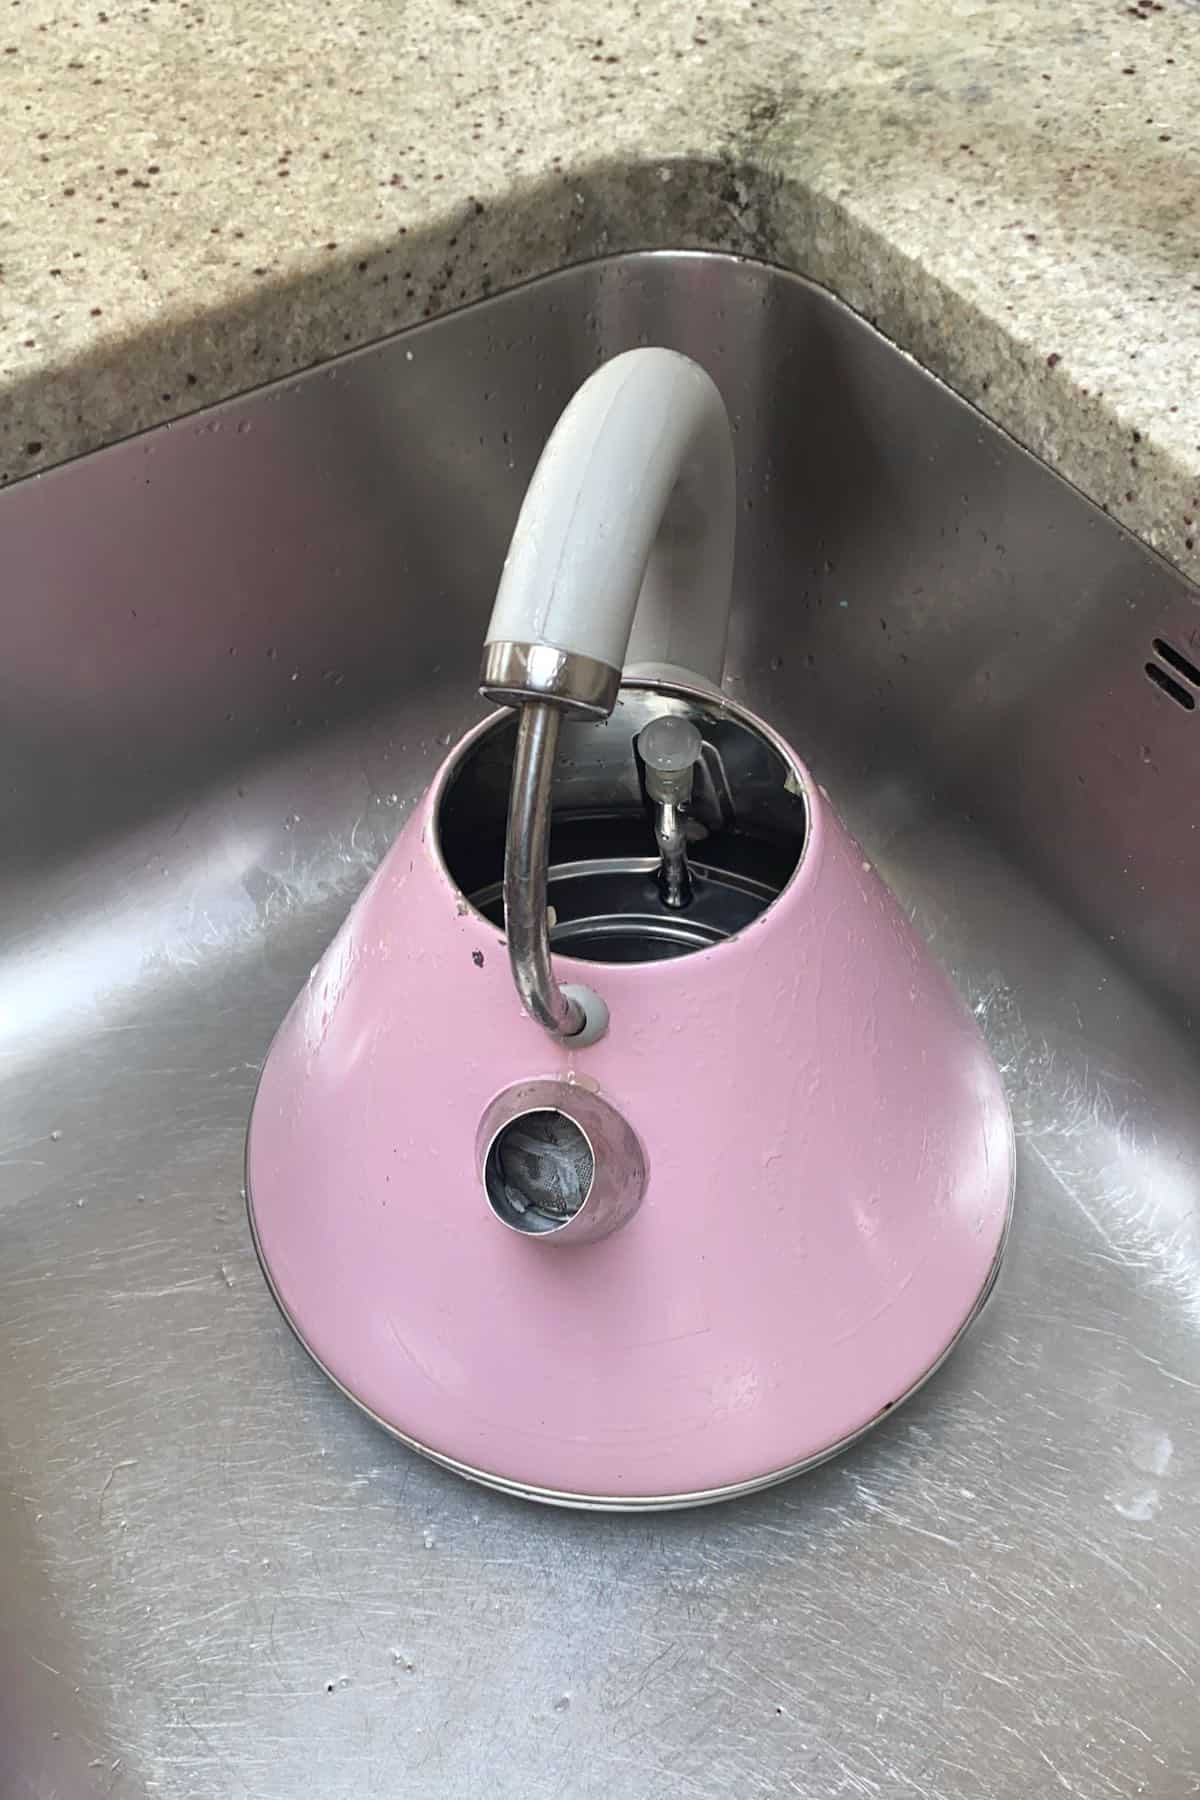 Freshly cleaned kettle in a sink